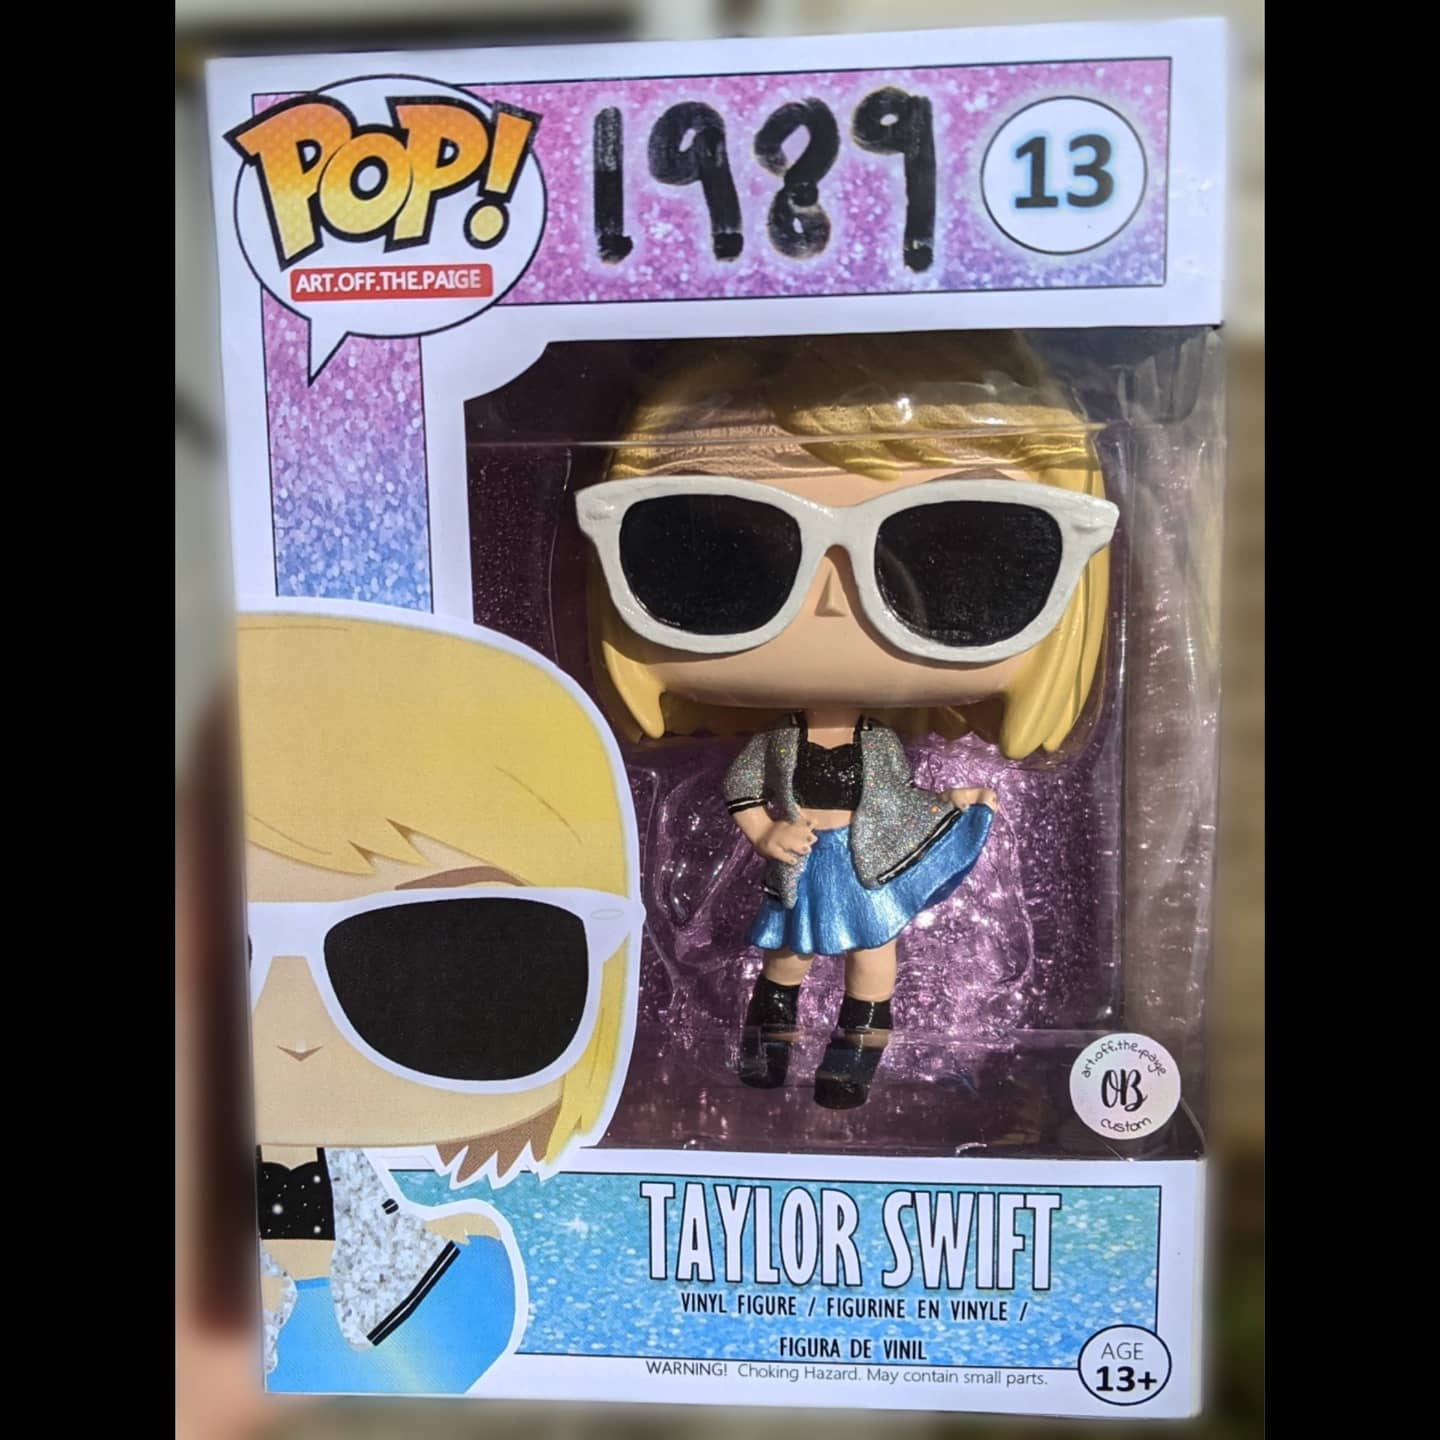 art.off.the.paige / Olivia on X: Taylor Swift 1989 Custom Funko Pop - Blue  skirt edition!! 💙💜 #taylor #swift #taylorswift #swiftie #swifties  #taylornation #lover #reputation #art #artist #custom #customfunkopop #funko  #funkopop #purple #fearless #